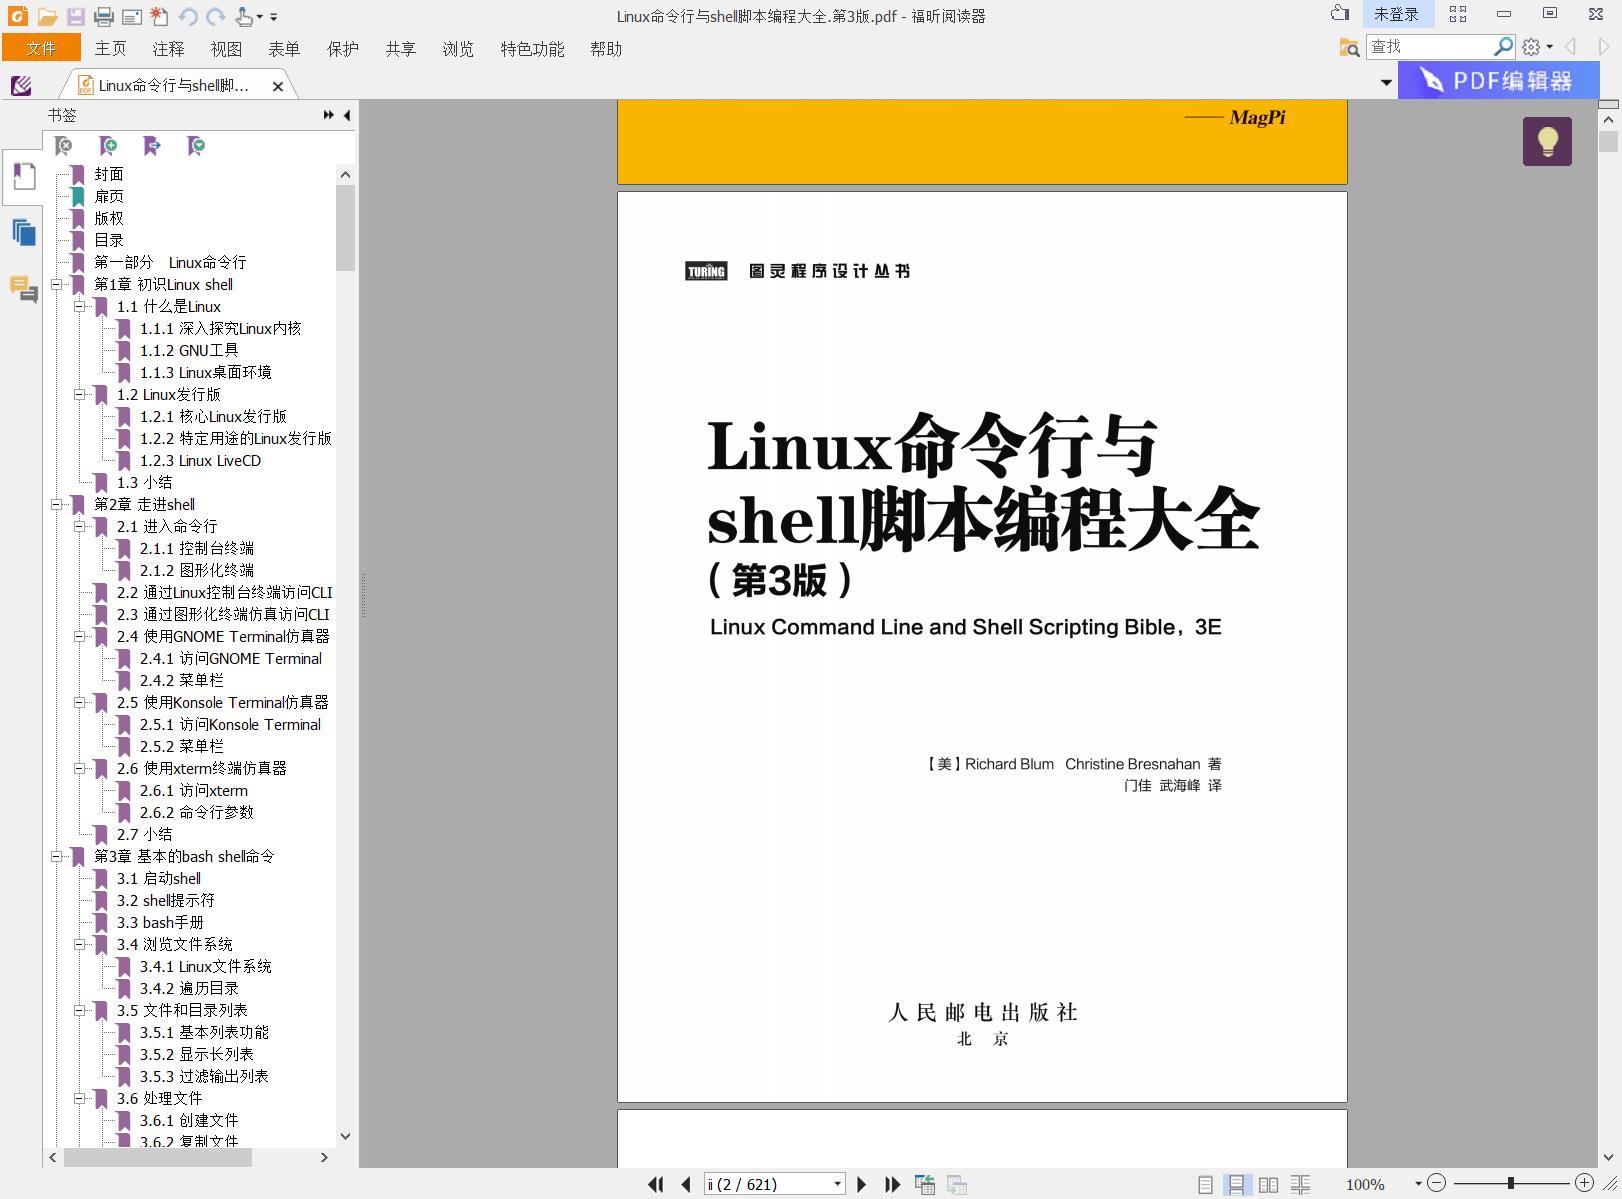 linux命令行与shell脚本编程大全第3版电子书籍下载pdf百度网盘